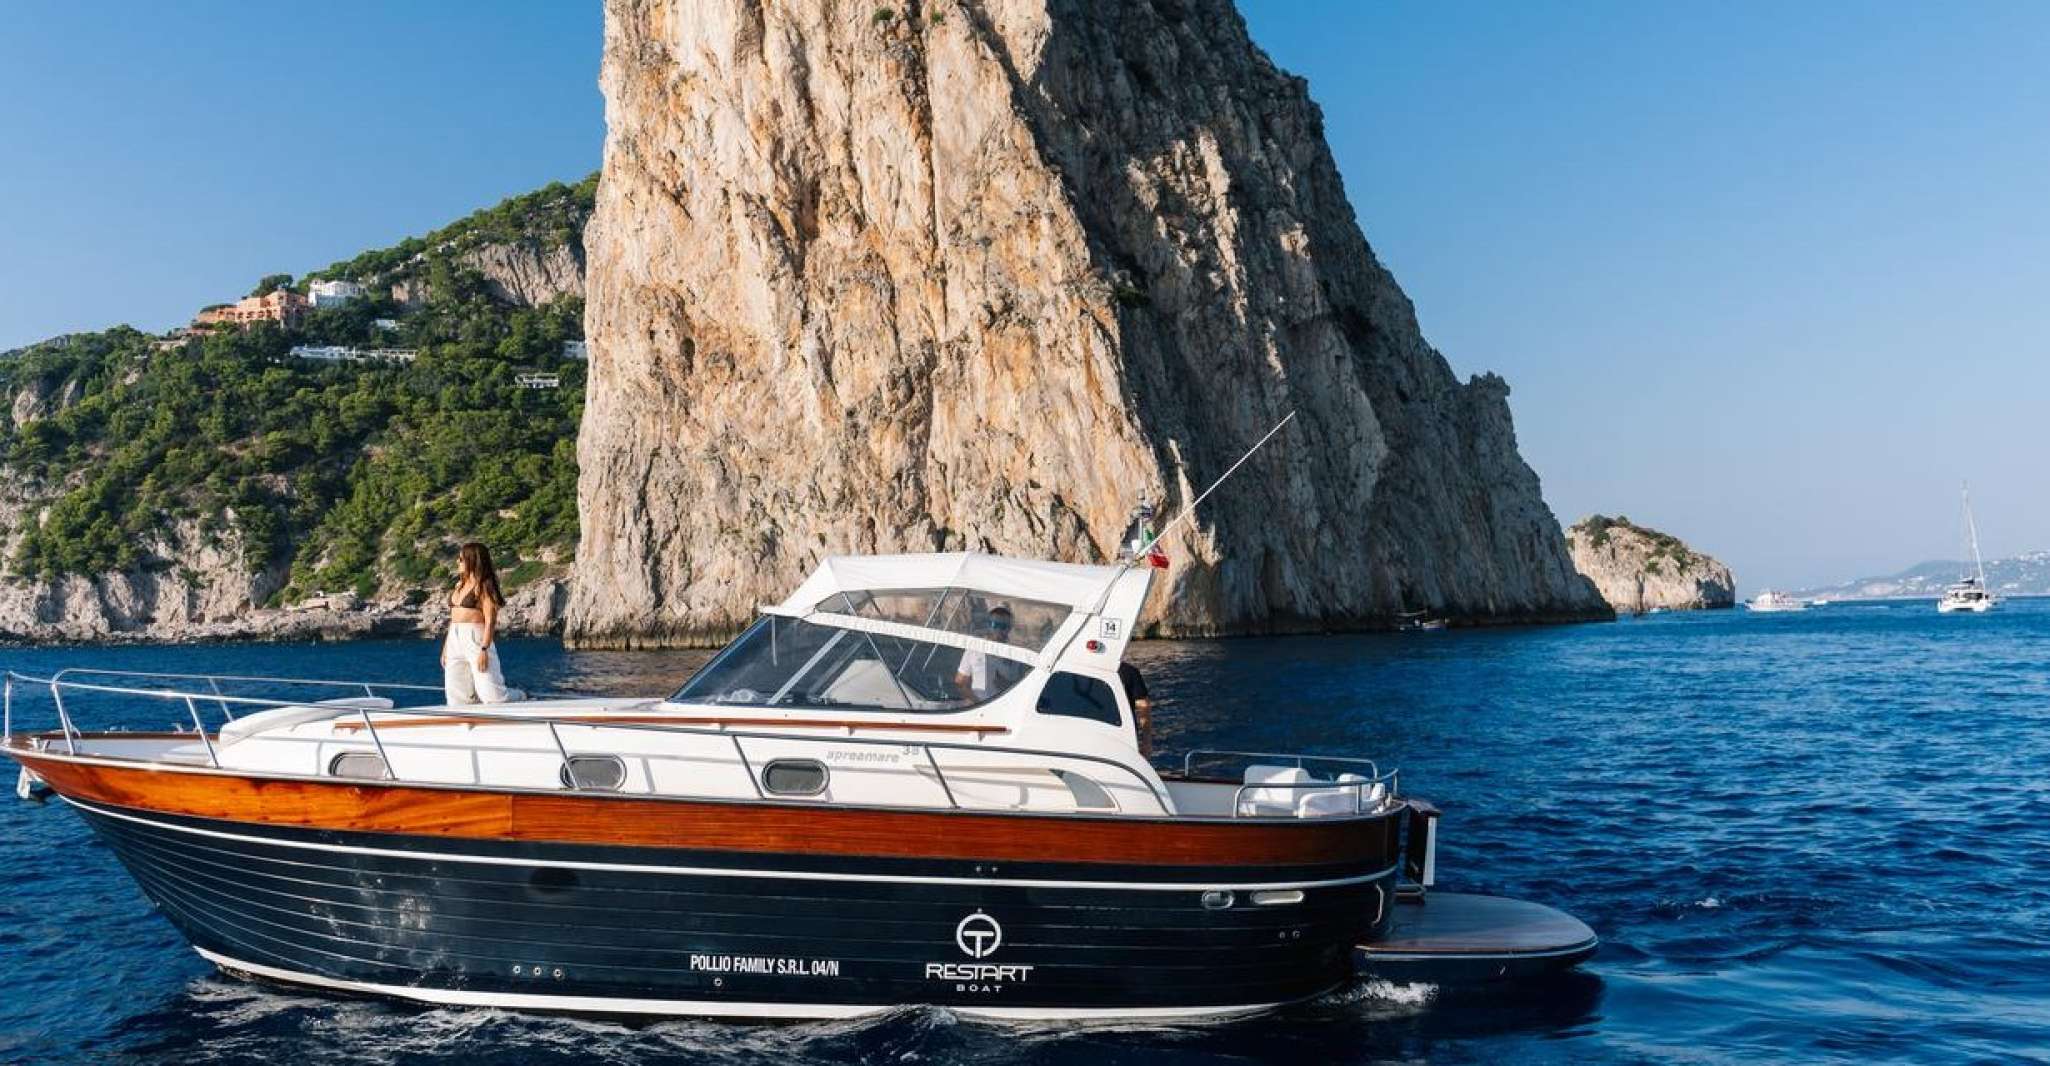 Positano, Boat Tour of Capri with Drinks and Snacks - Housity